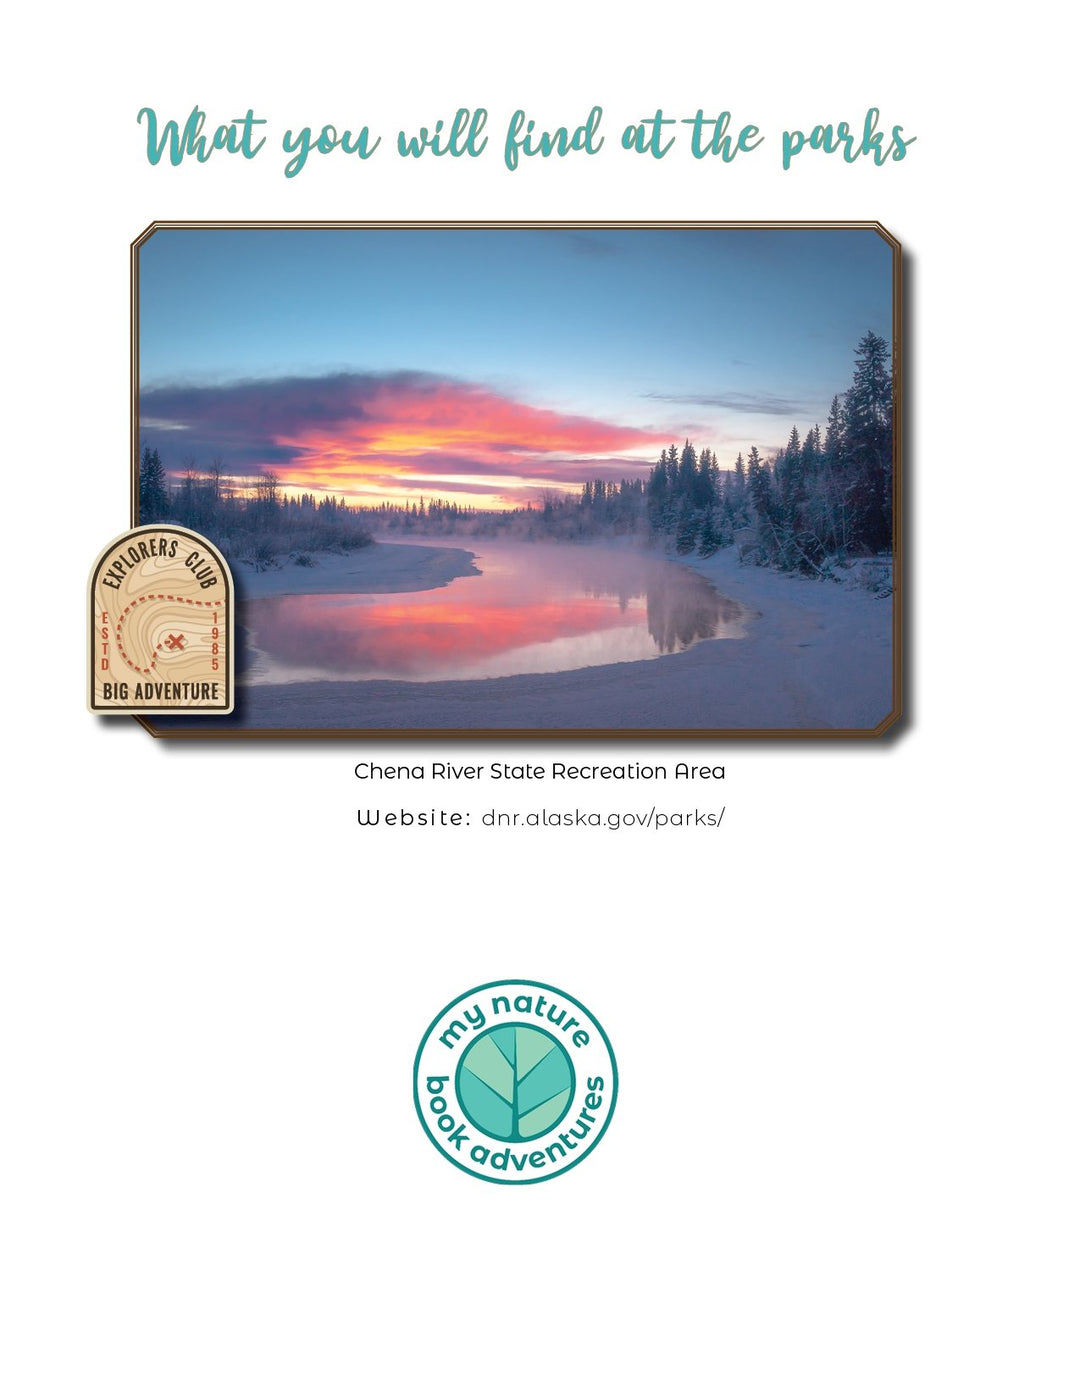 Alaska State Parks - Adventure Planning Journal - My Nature Book Adventures